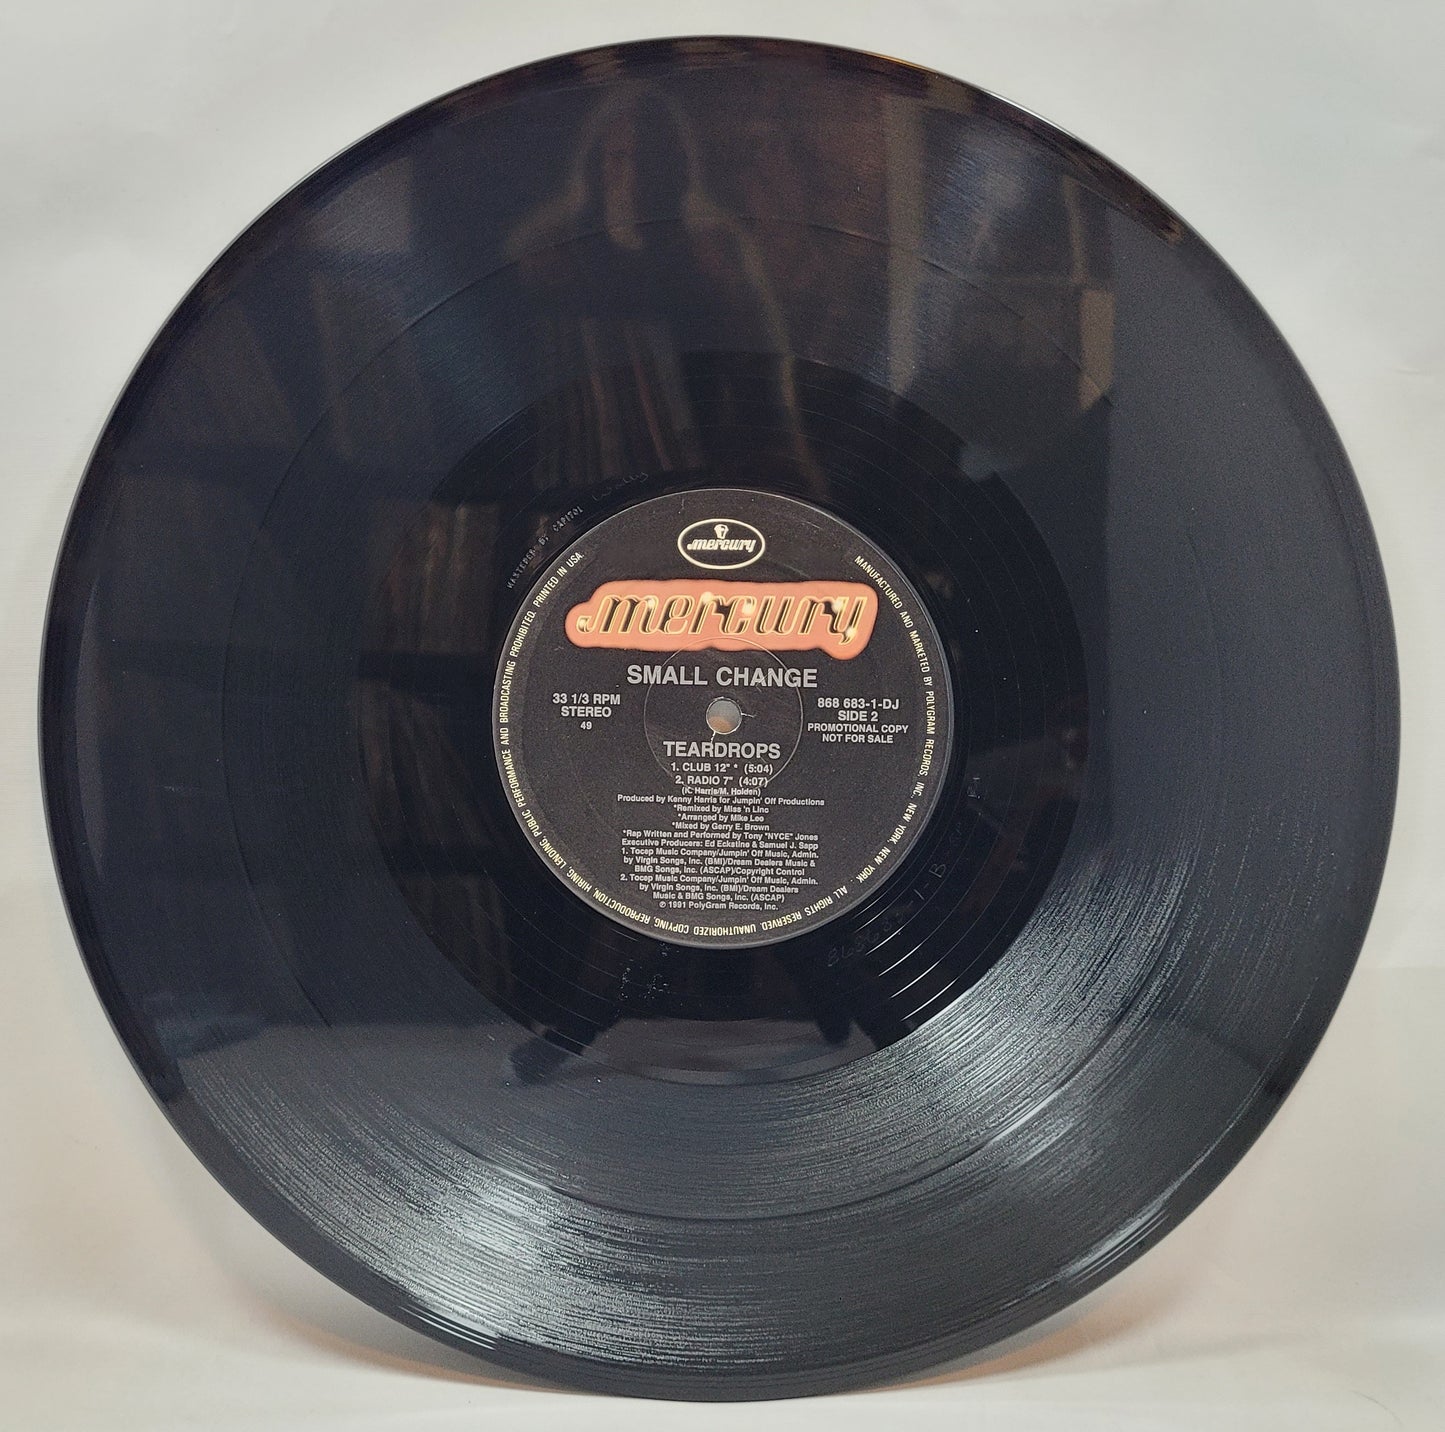 Small Changes - Teardrops [Promo] [Vinyl Record 12" Single]